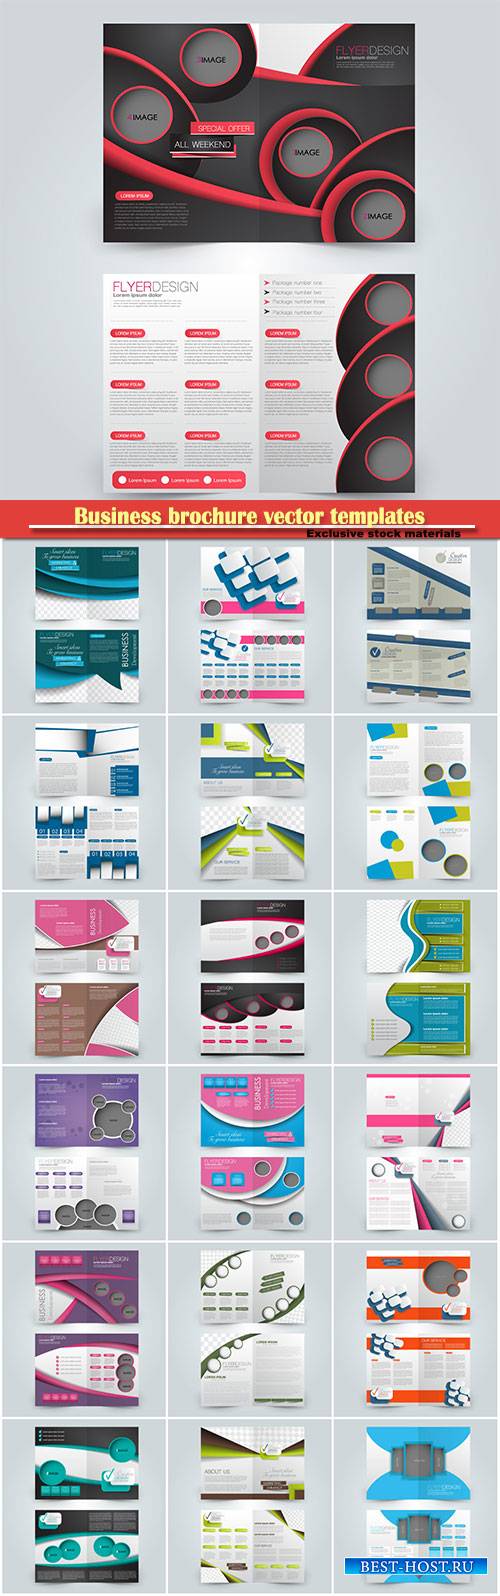 Business brochure vector templates, magazine cover, business mockup, education, presentation, report # 54